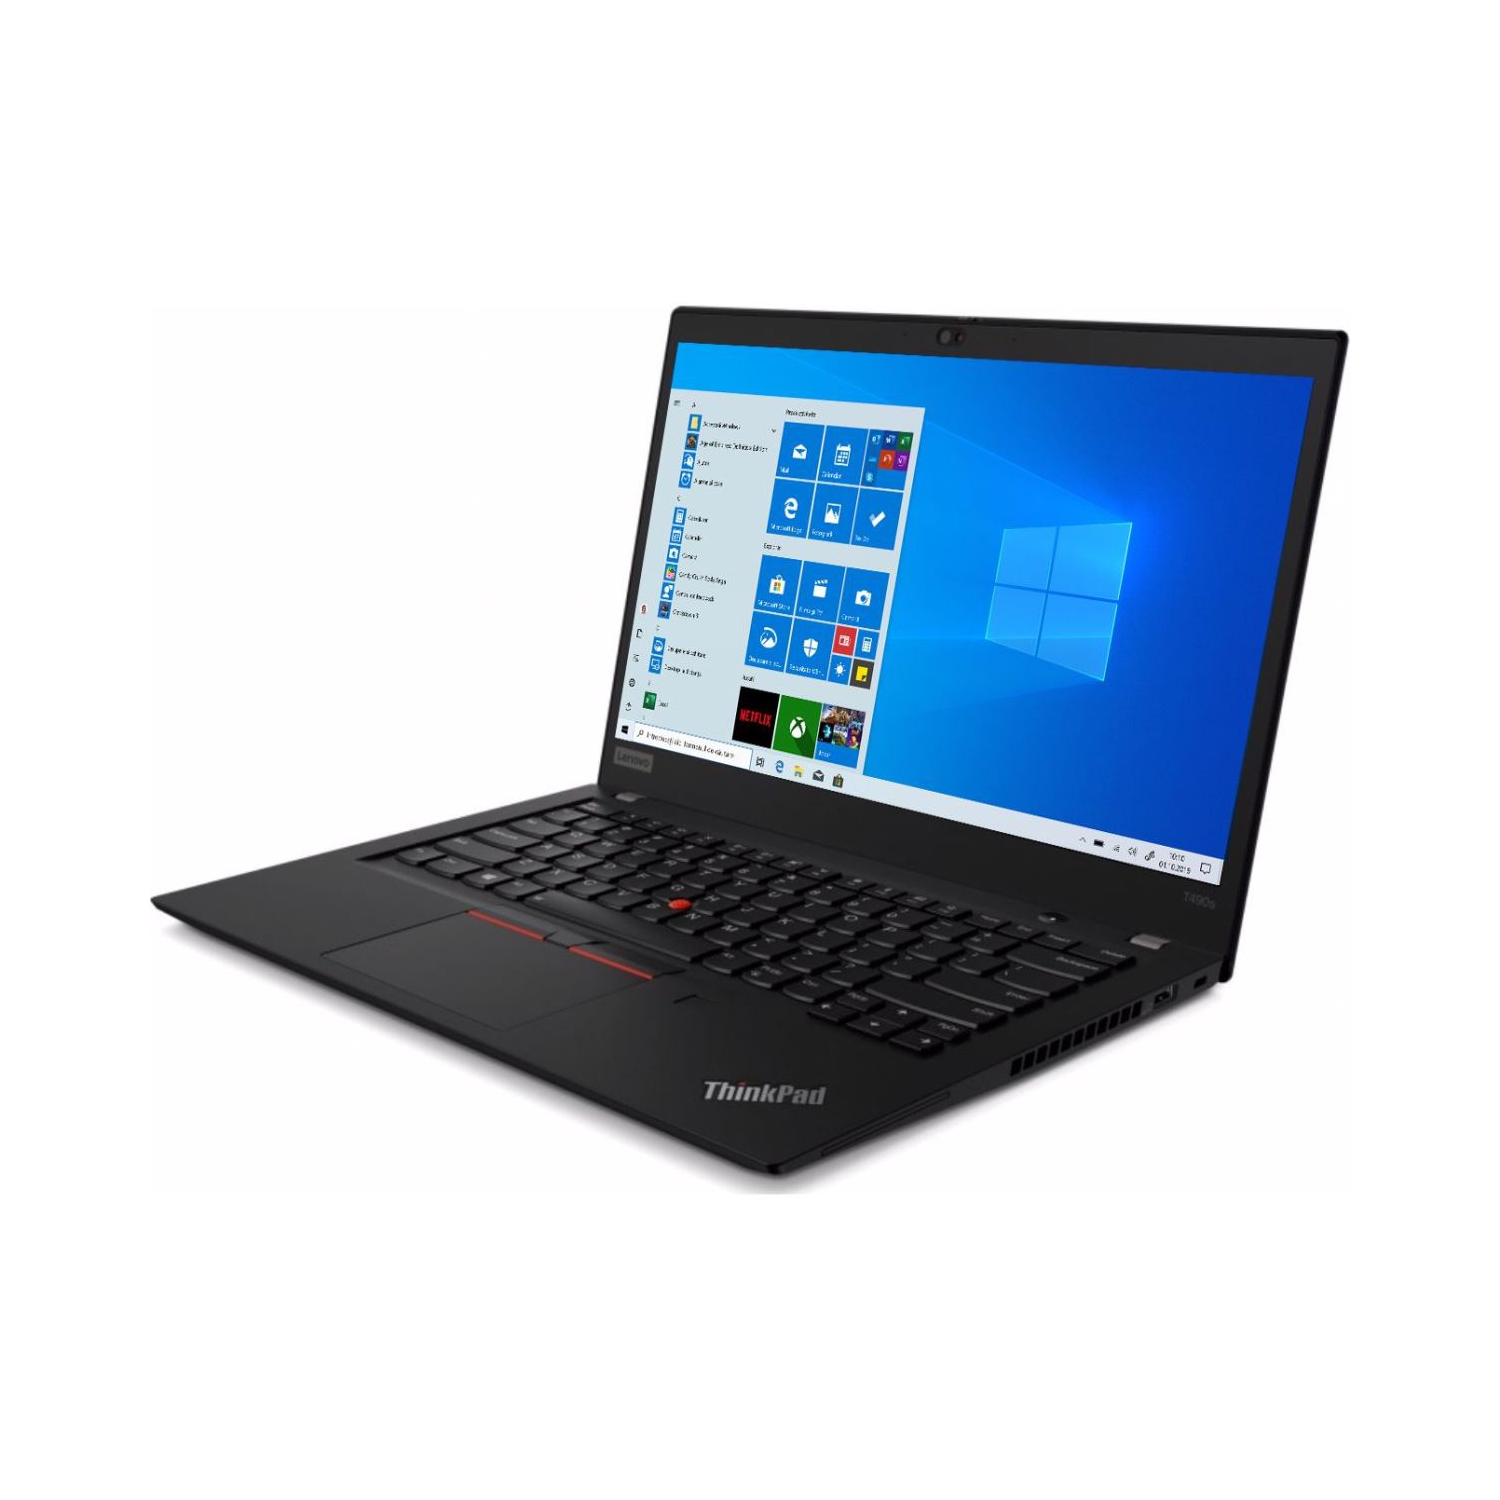 Refurbished(Excellent) - Lenovo Thinkpad L480 Laptop Intel Core i5 256GB SSD 16GB RAM Windows 10 Pro Black - 1 Year Warranty